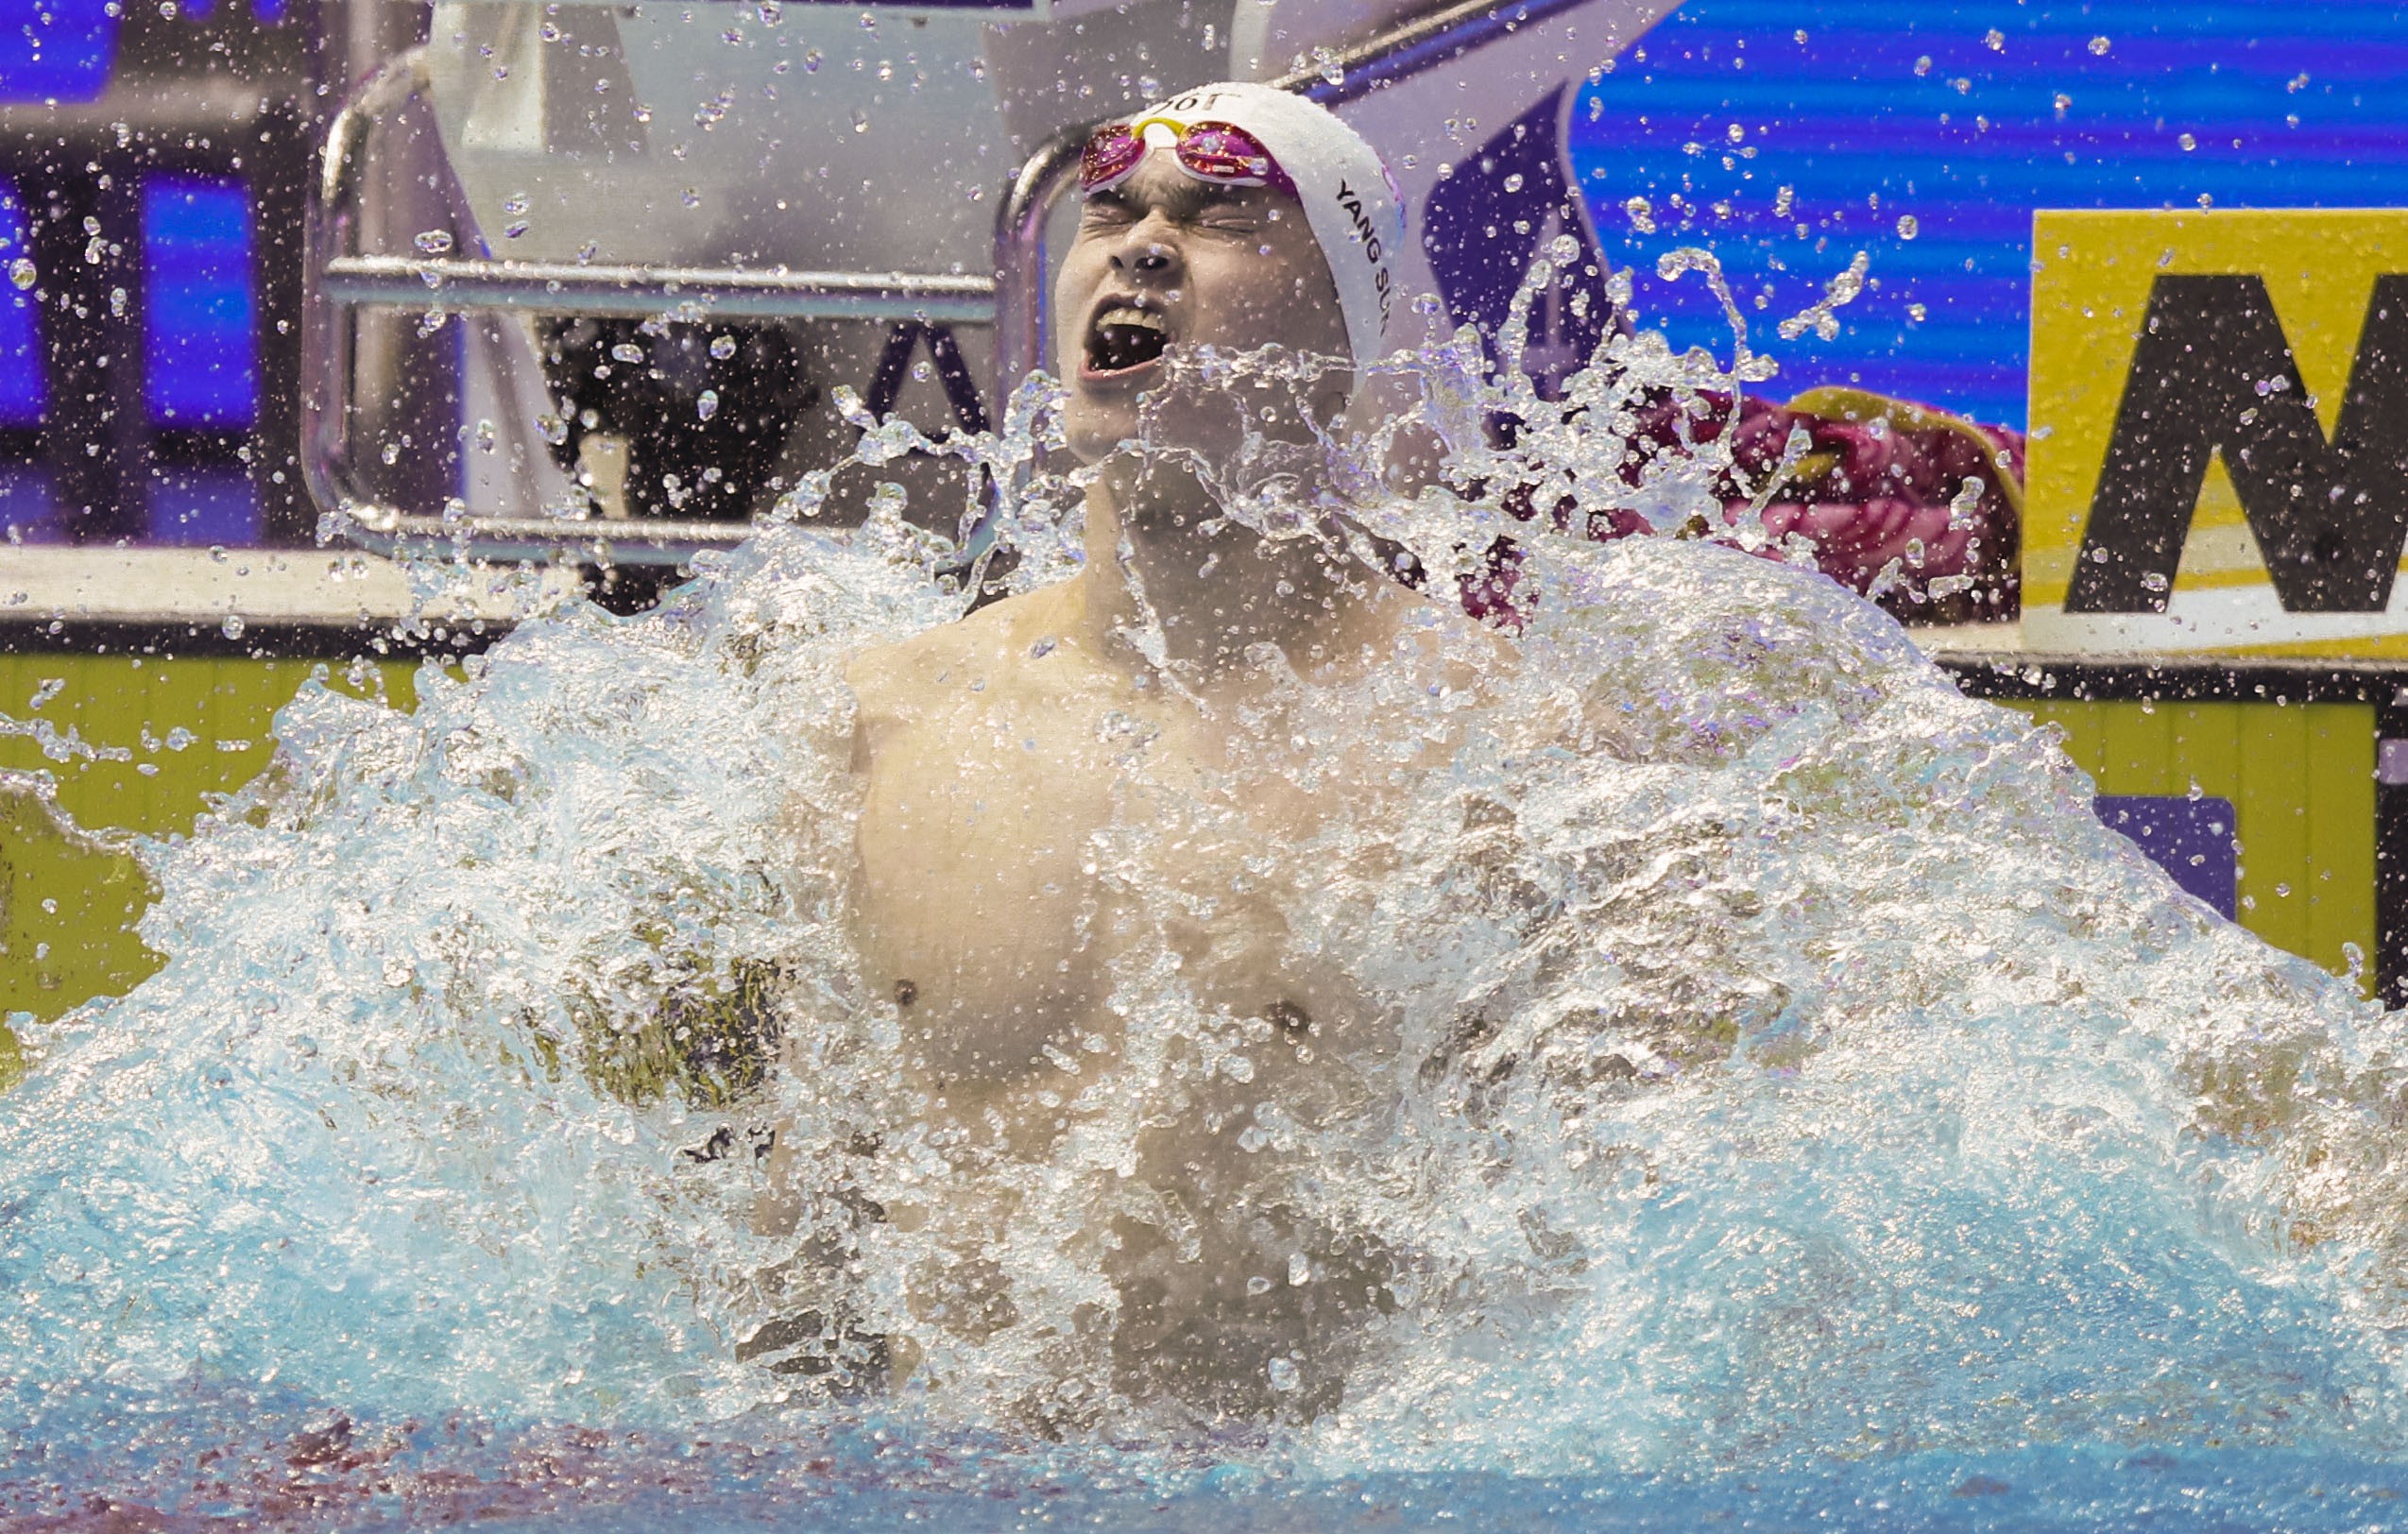 Sun Yang of China reacts after winning the men's 400m freestyle final at the Gwangju 2019 FINA World Championships in Gwangju, South Korea. Photo: Xinhua